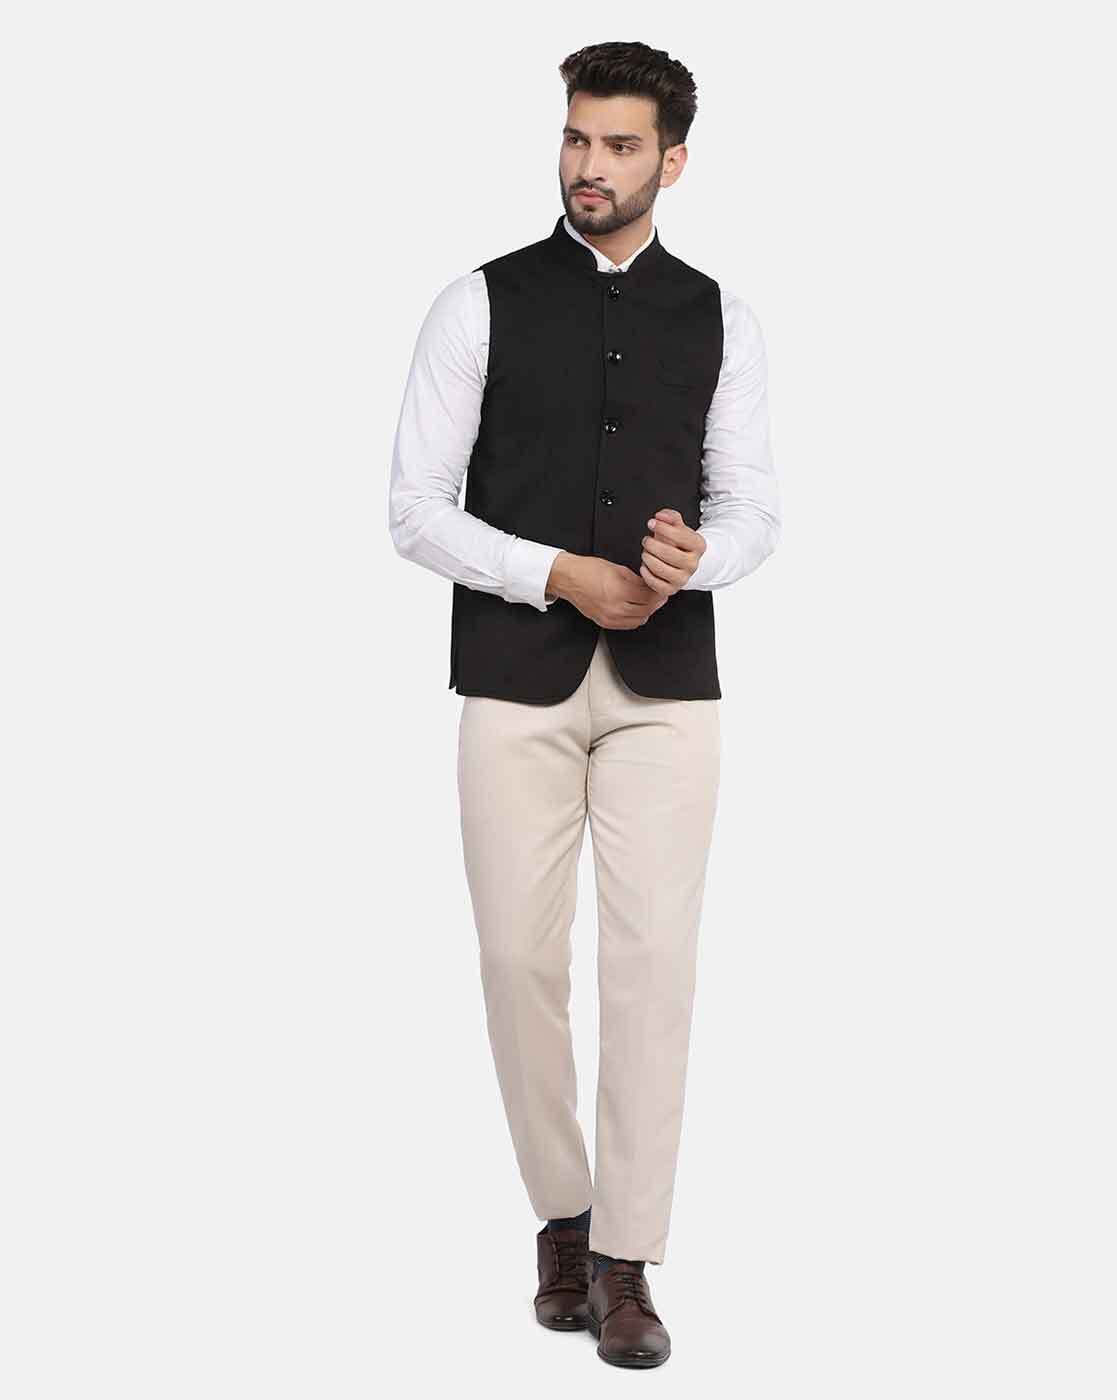 Plain Black Nehru Jacket With White Shirt and Trouser - Etsy